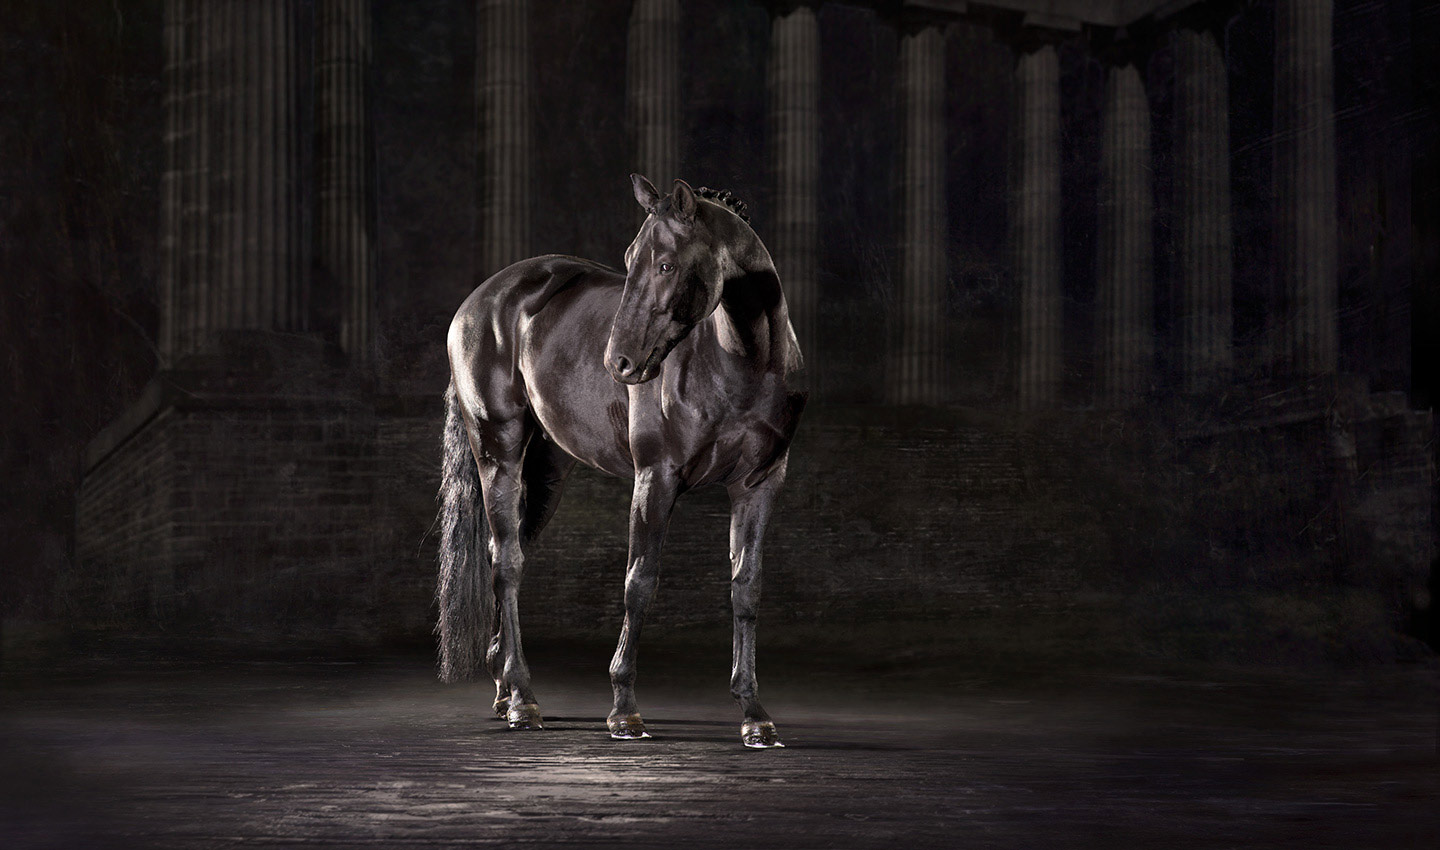 Luna-black-dressage-horse-animal-equestrian-portrait-photography-photographer_Lindsay_Robertson